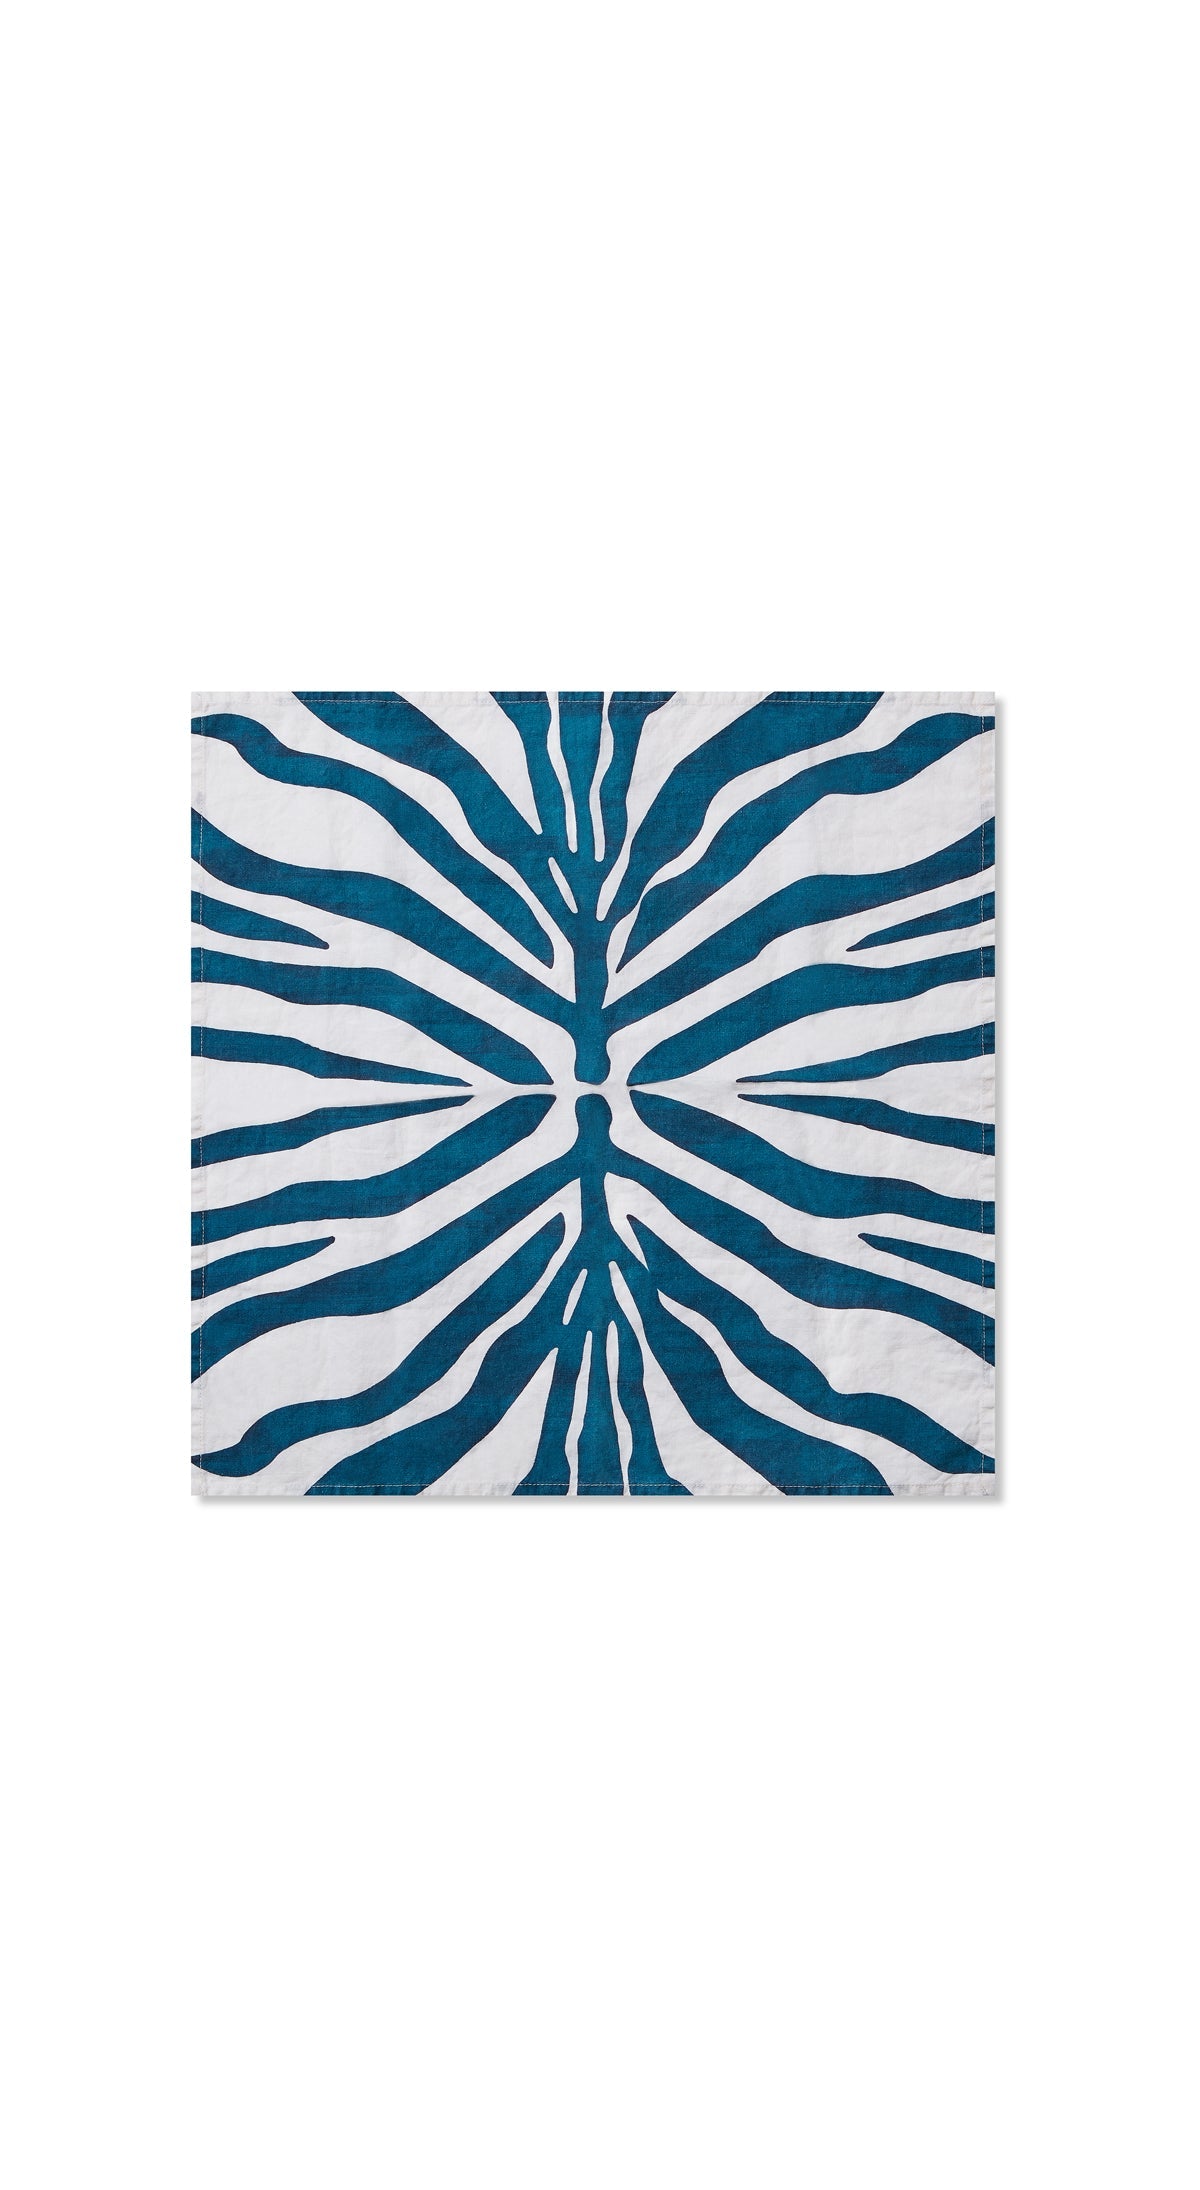 Zebra Linen Napkin in Petrol Blue, 50x50cm